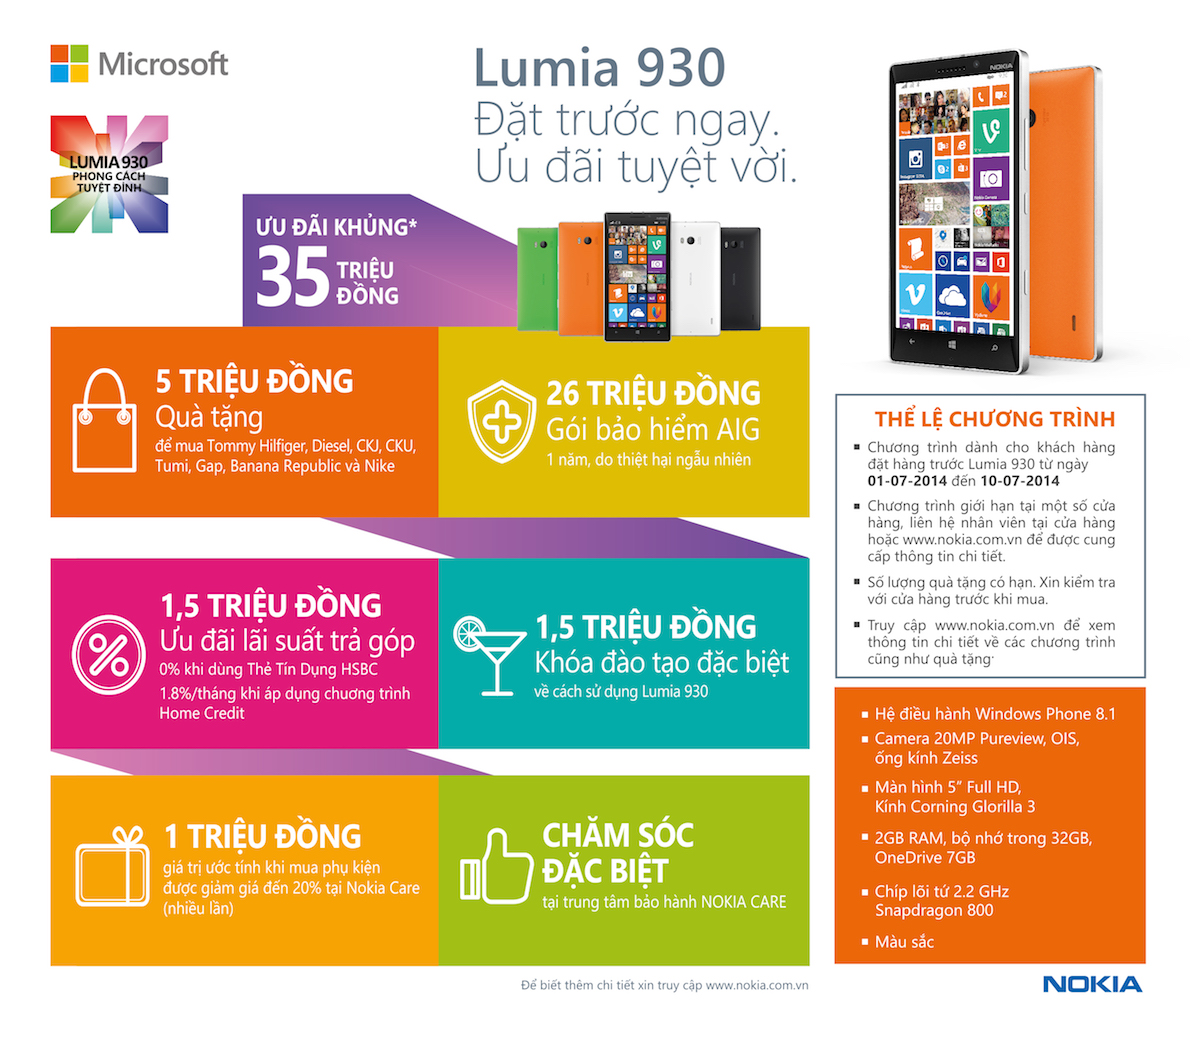 lumia 930 online.jpg